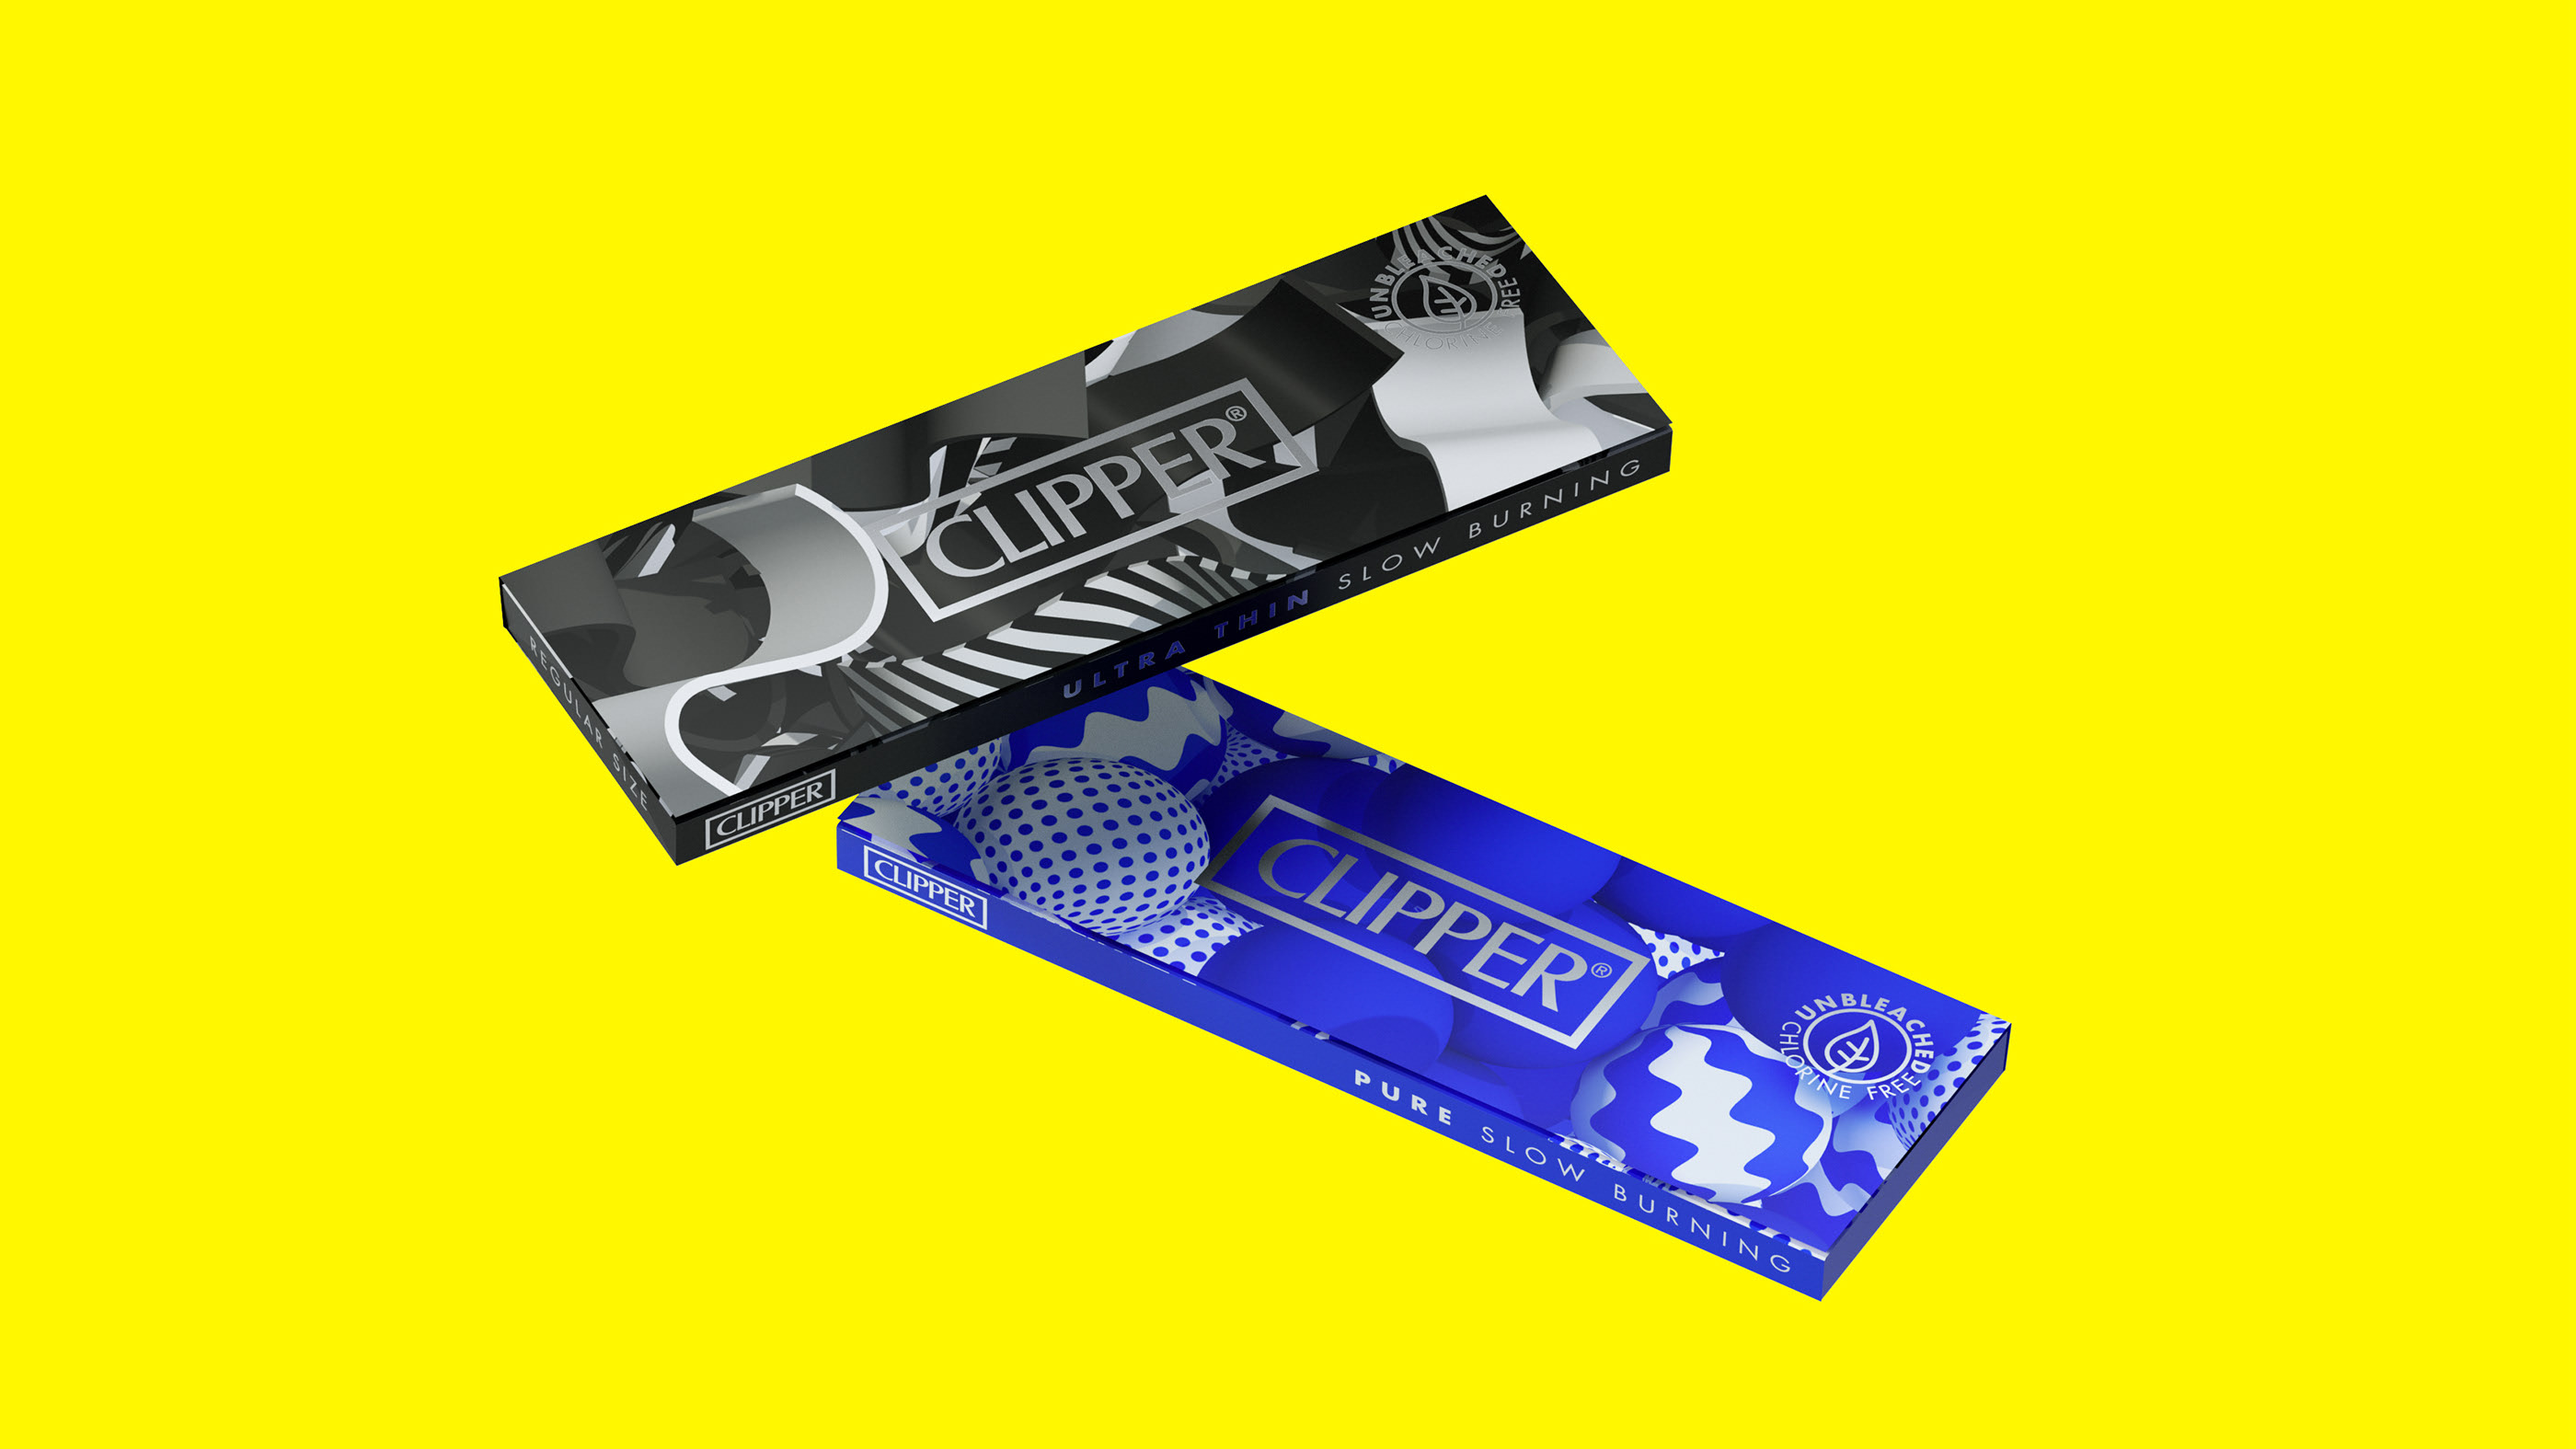 Clipper - Limited Edition packaging on Behancecff39090696549.5e1e22df7d59c.jpg